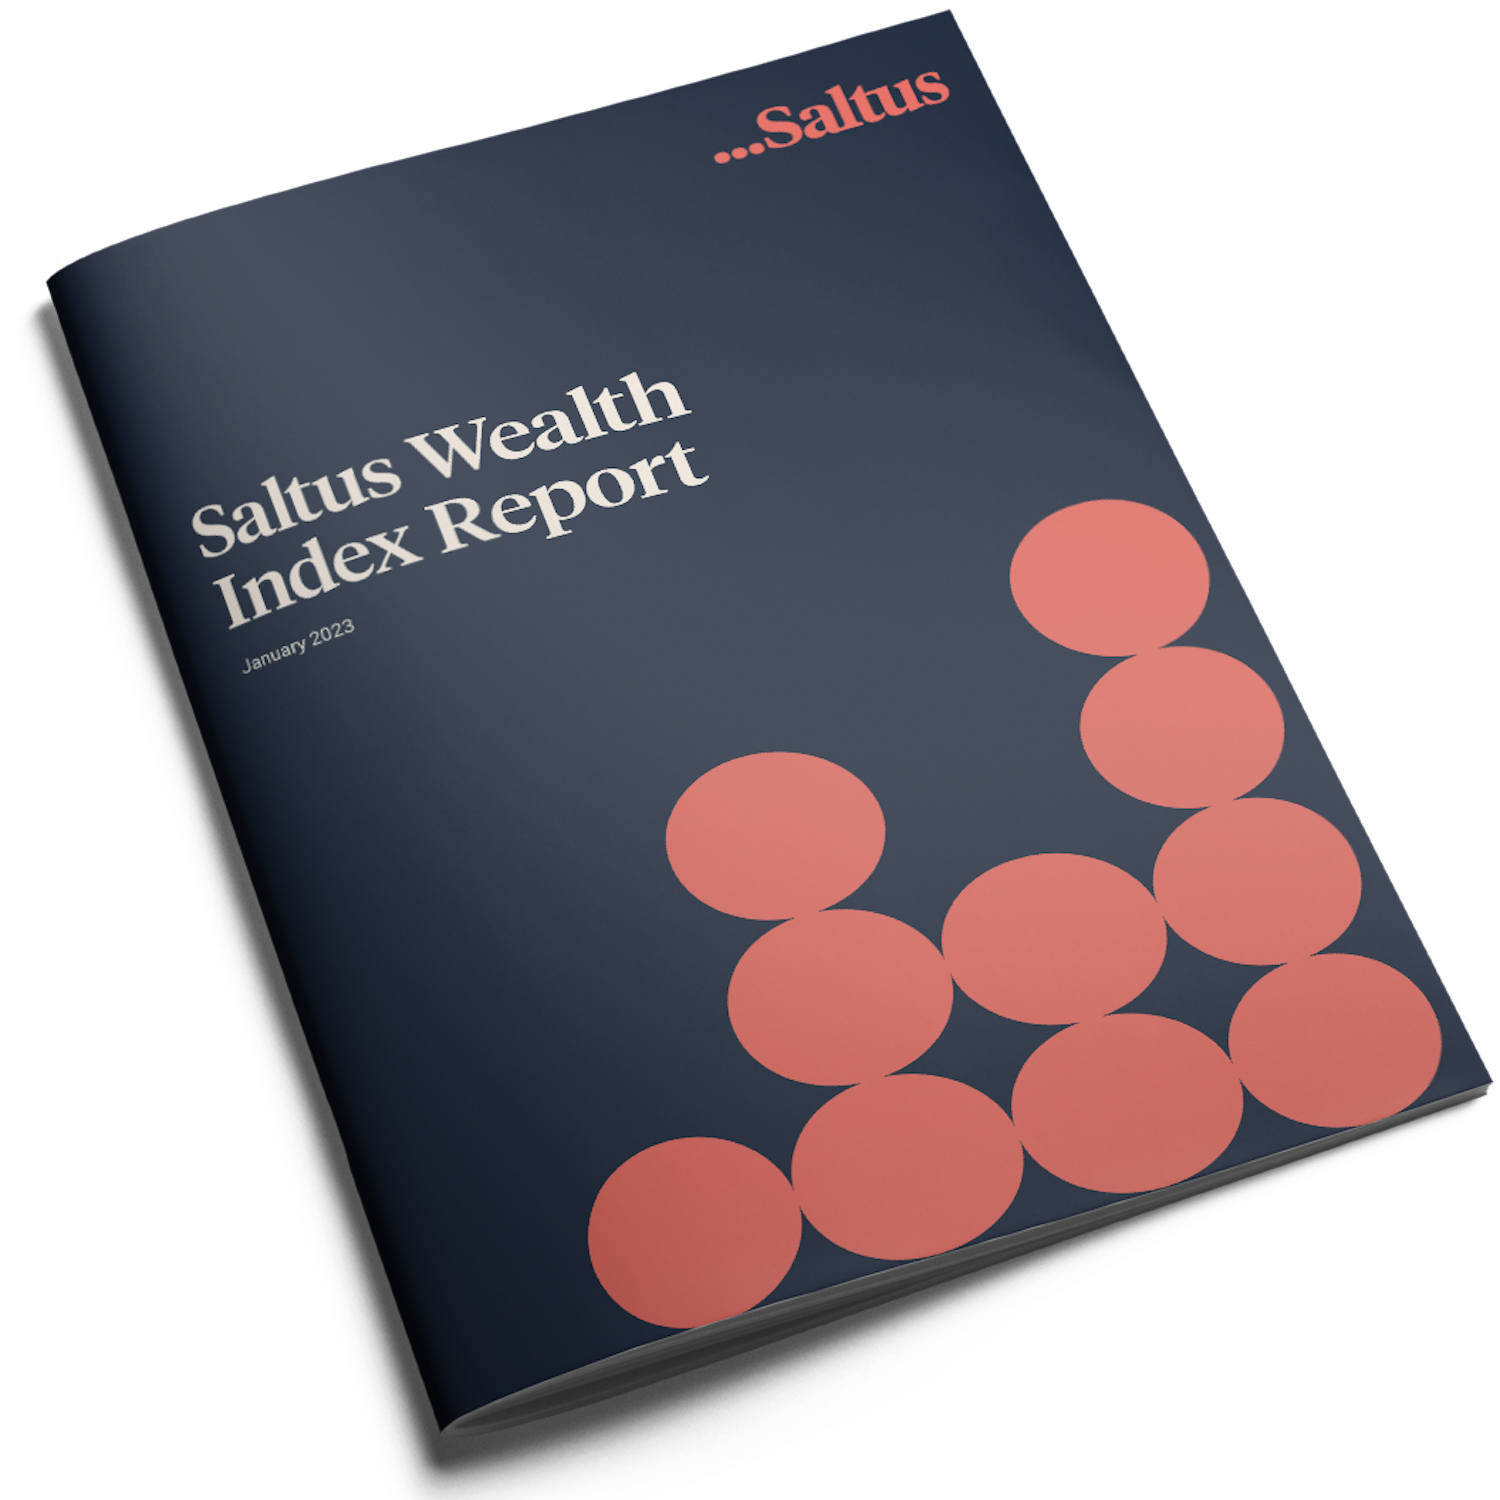 Saltus Wealth Index Report cover January 2023